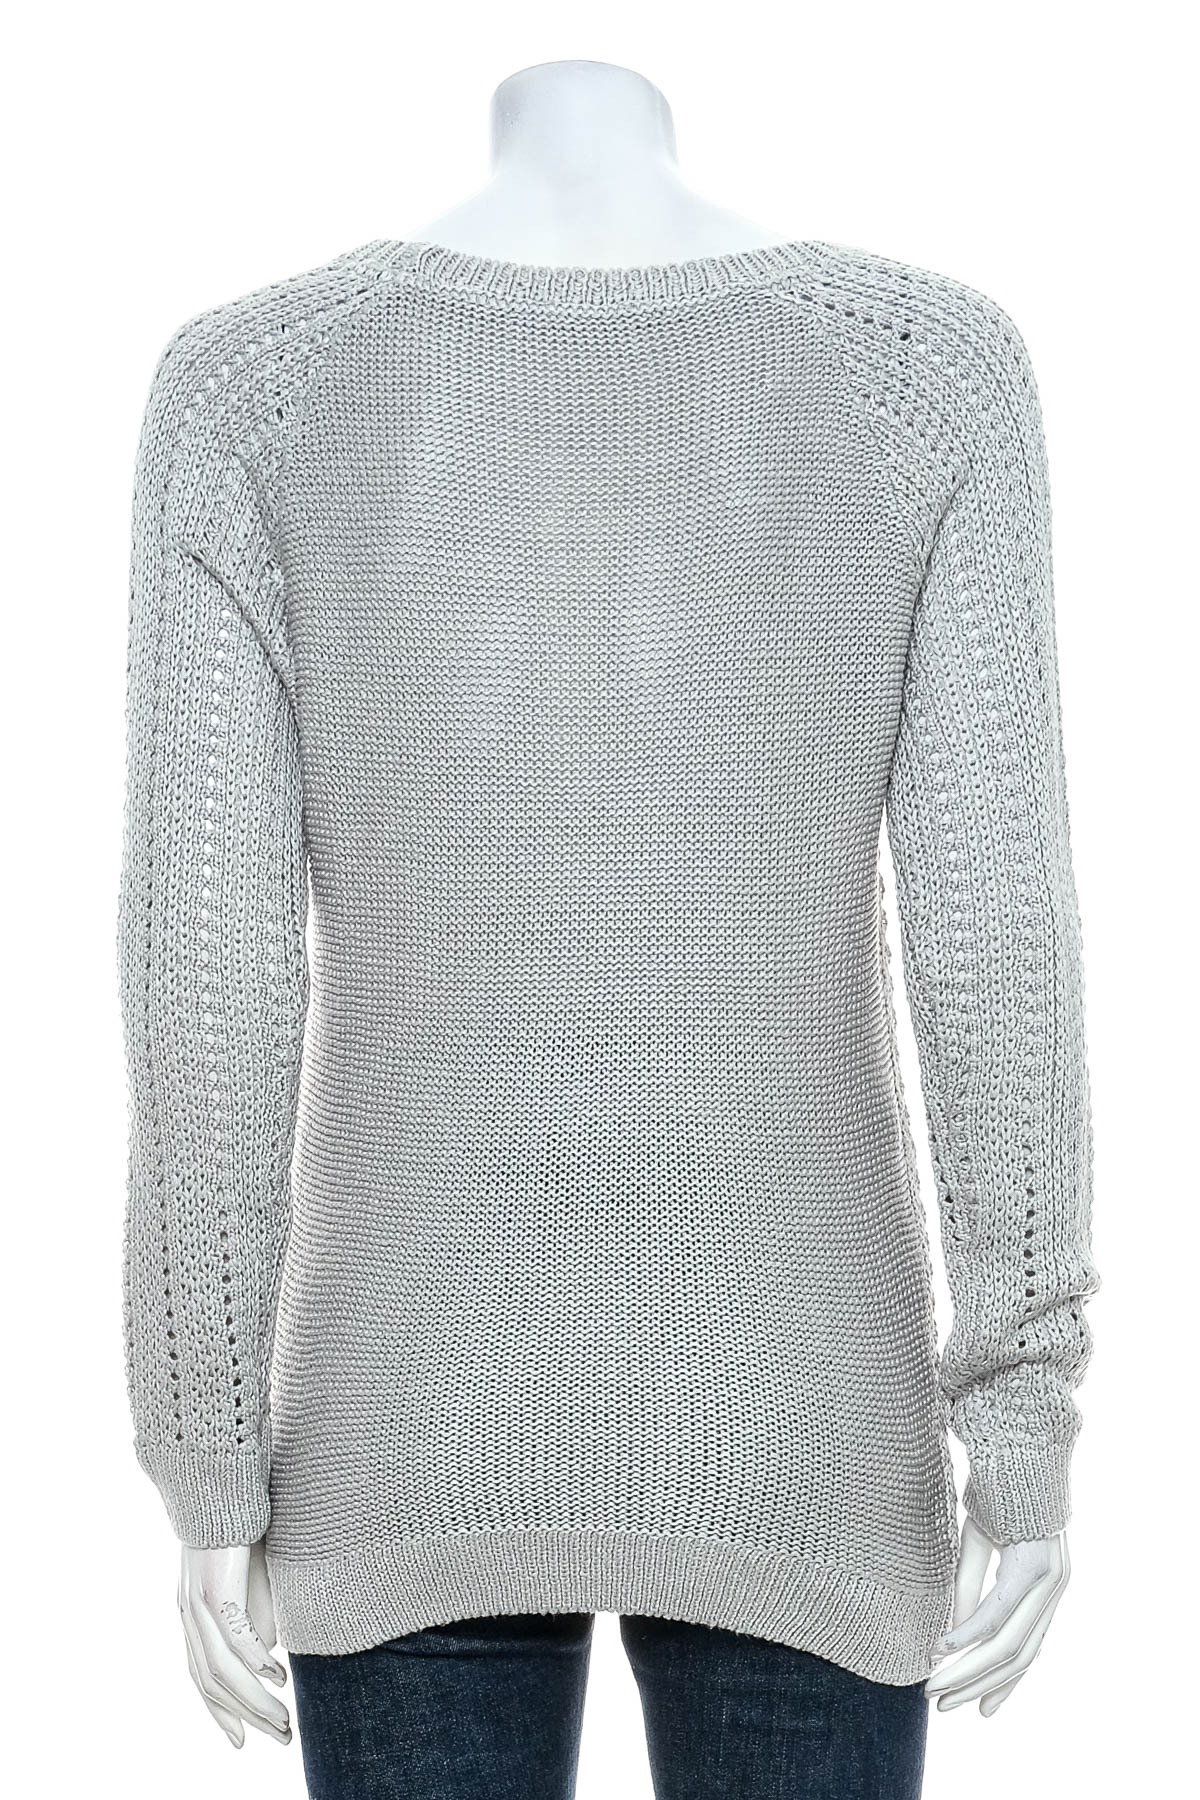 Women's sweater - 1